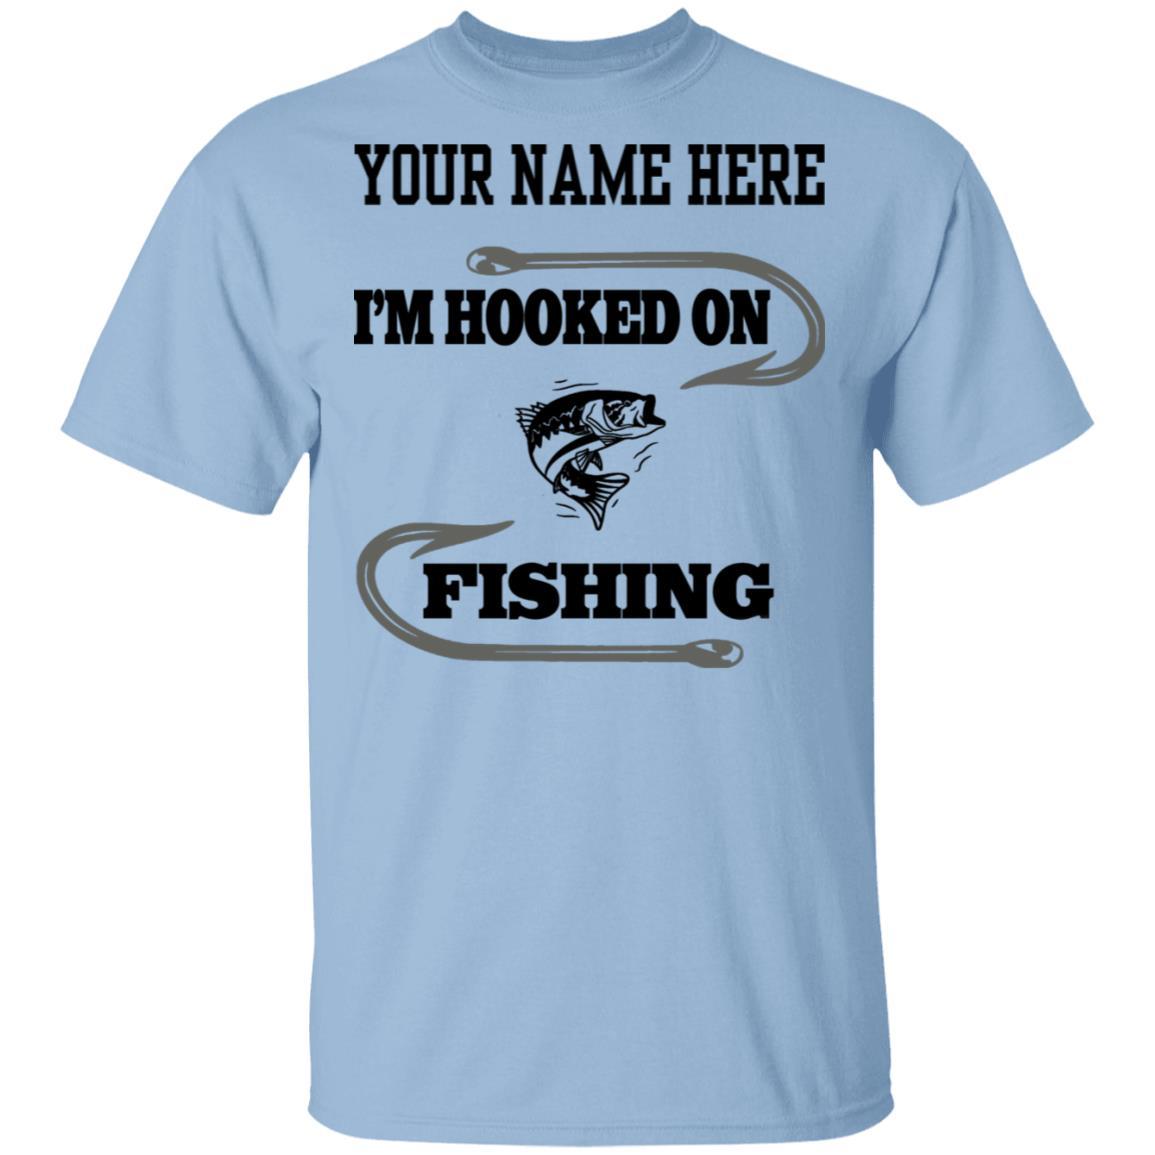 I'm hooked on fishing t-shirt b light-blue